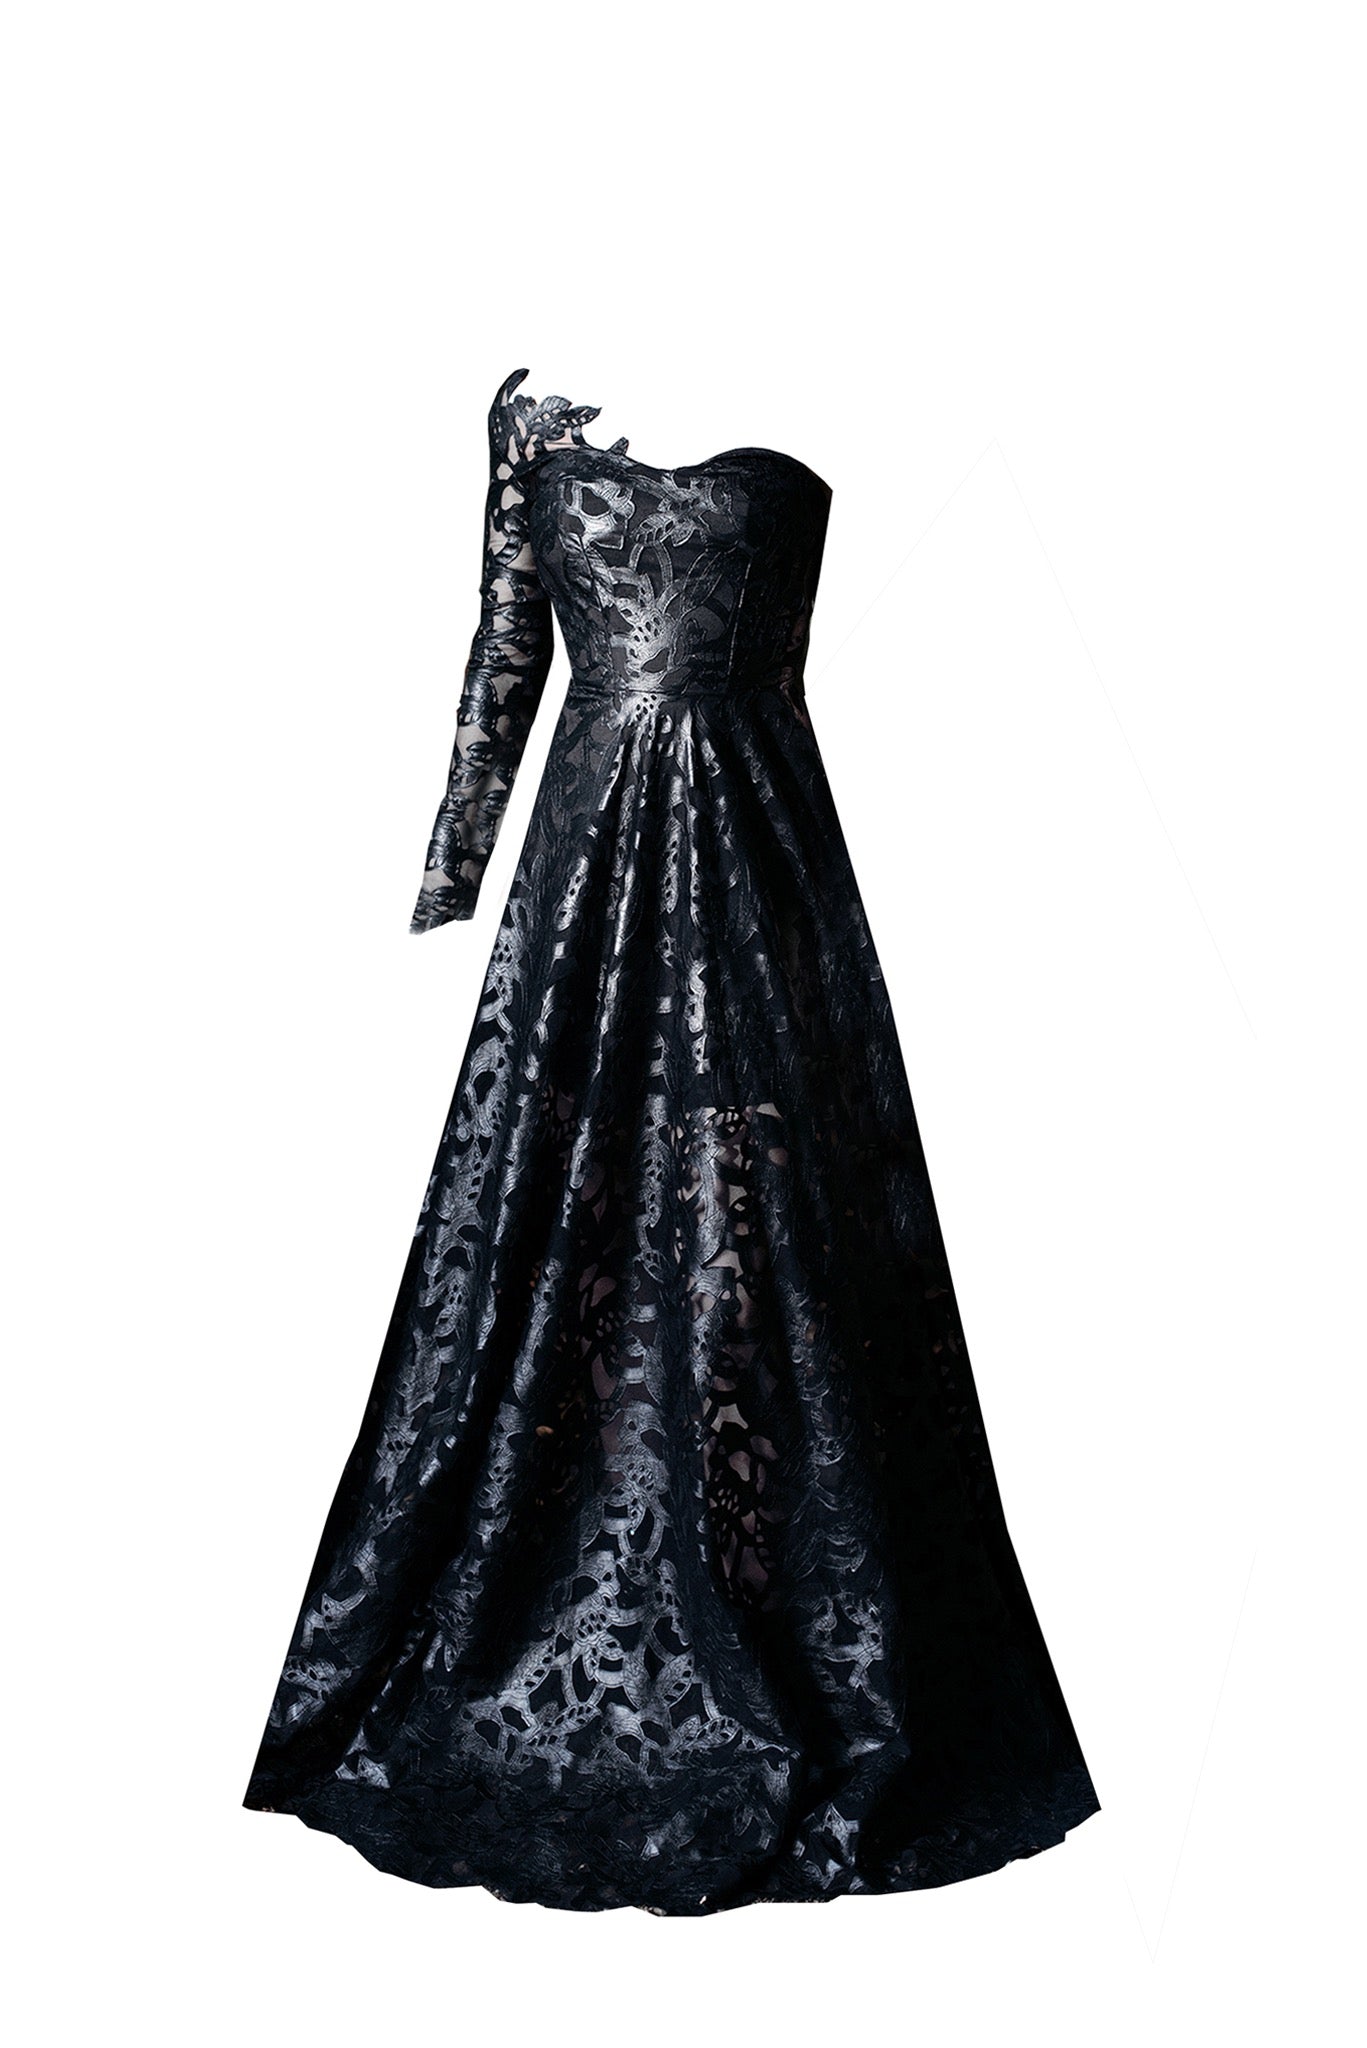 Asymmetric long black leather lace dress